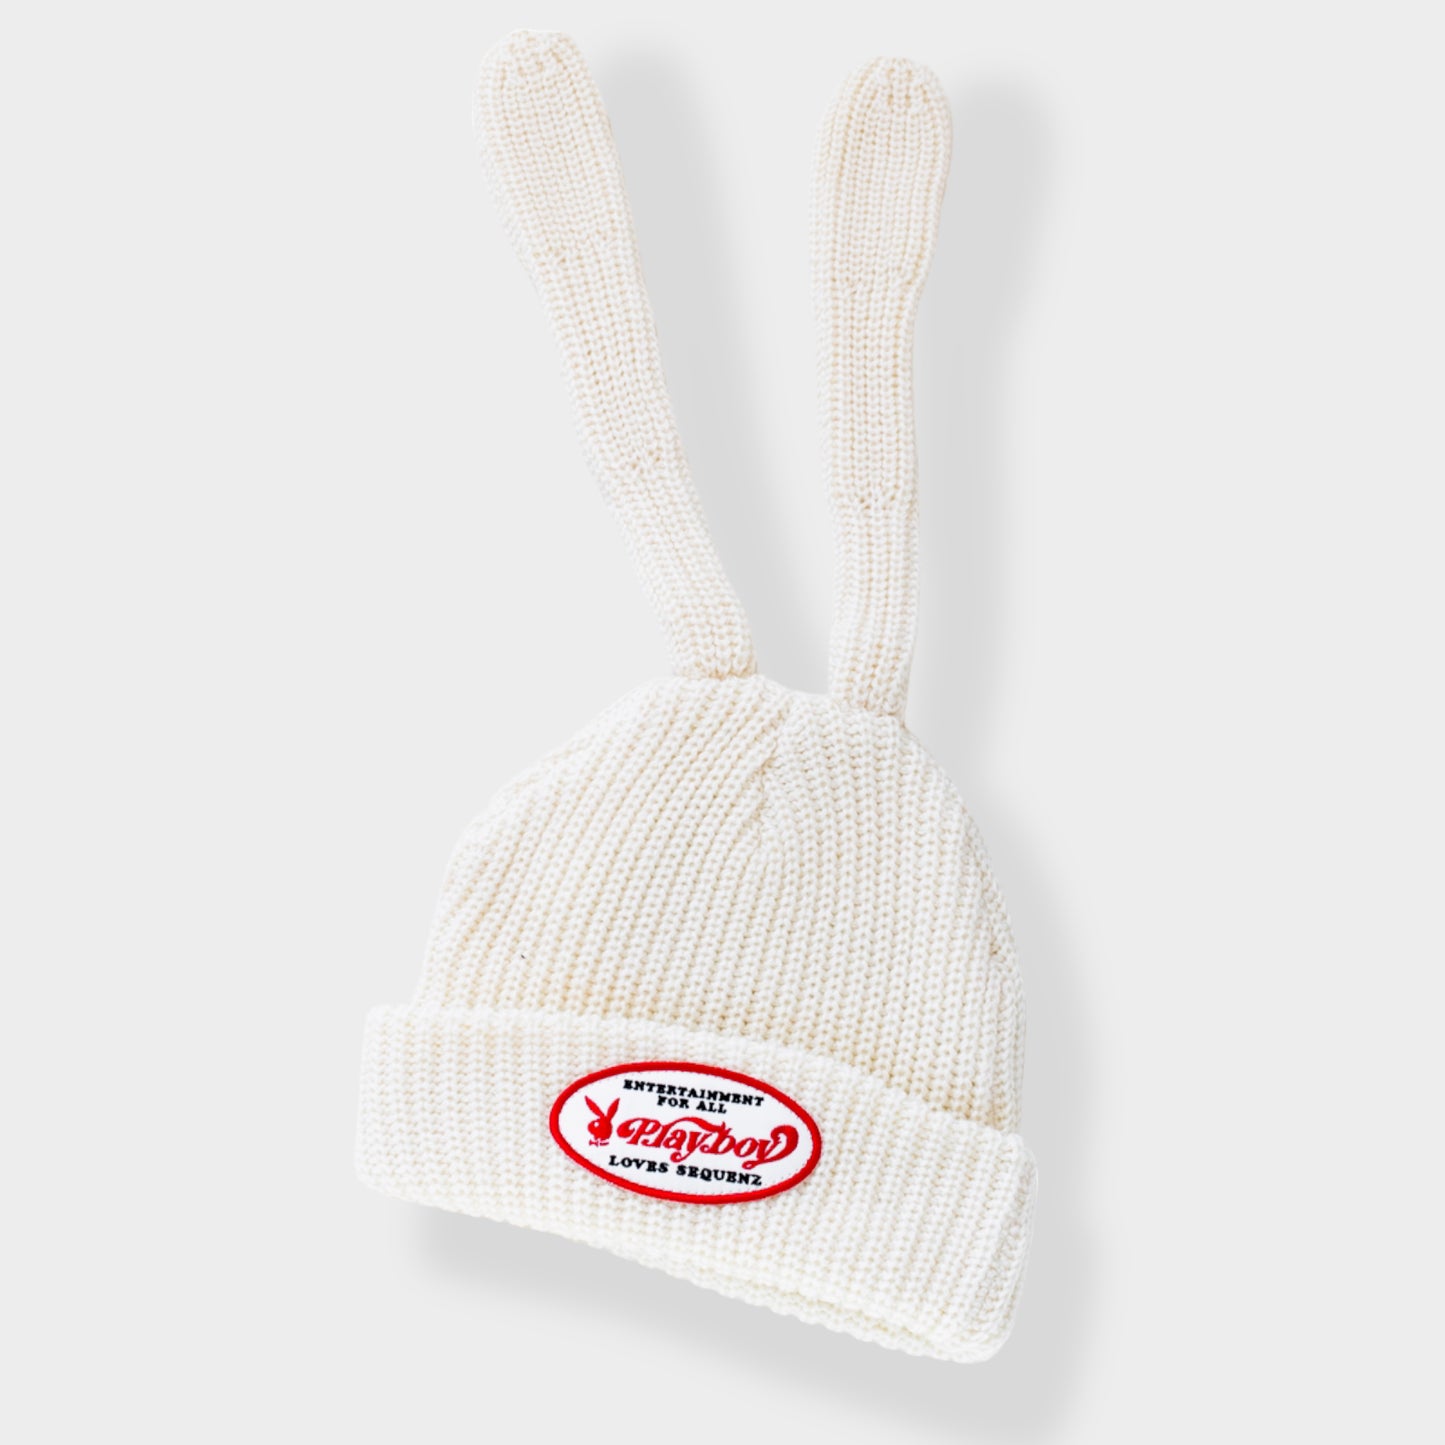 Play Boy Loves Sequenz Bunny Rabbit Knit Hat